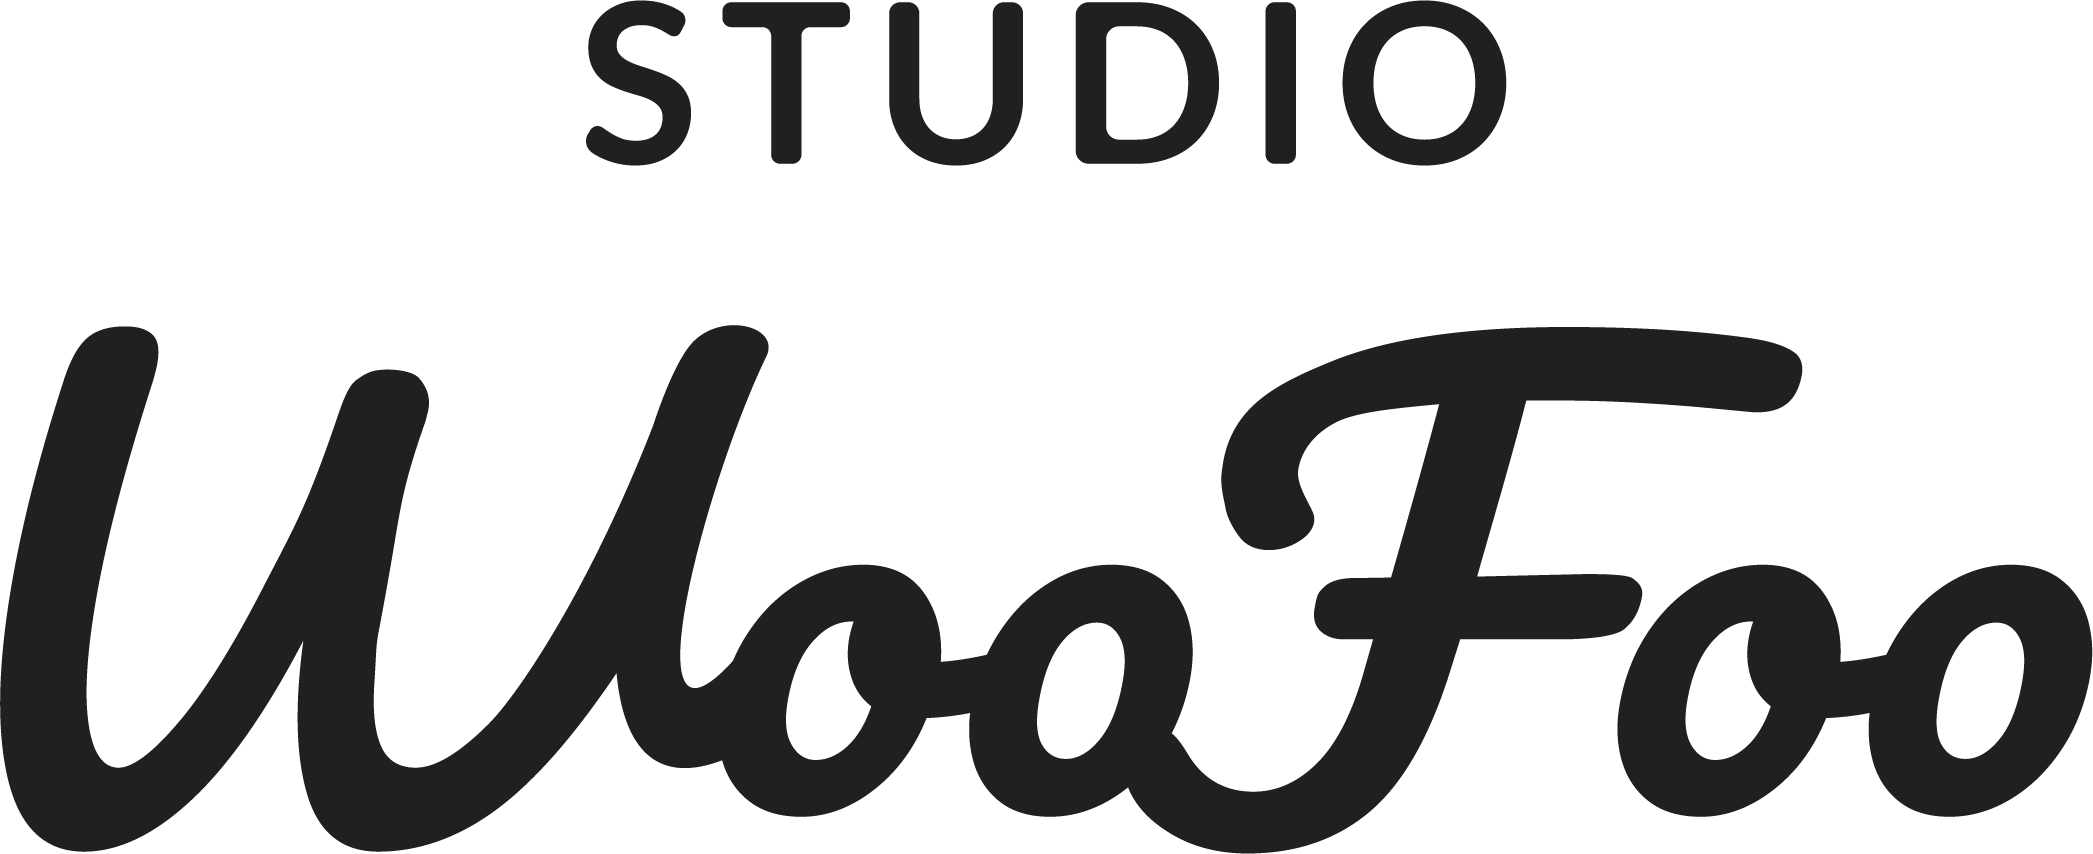 studiowoofoo-logo